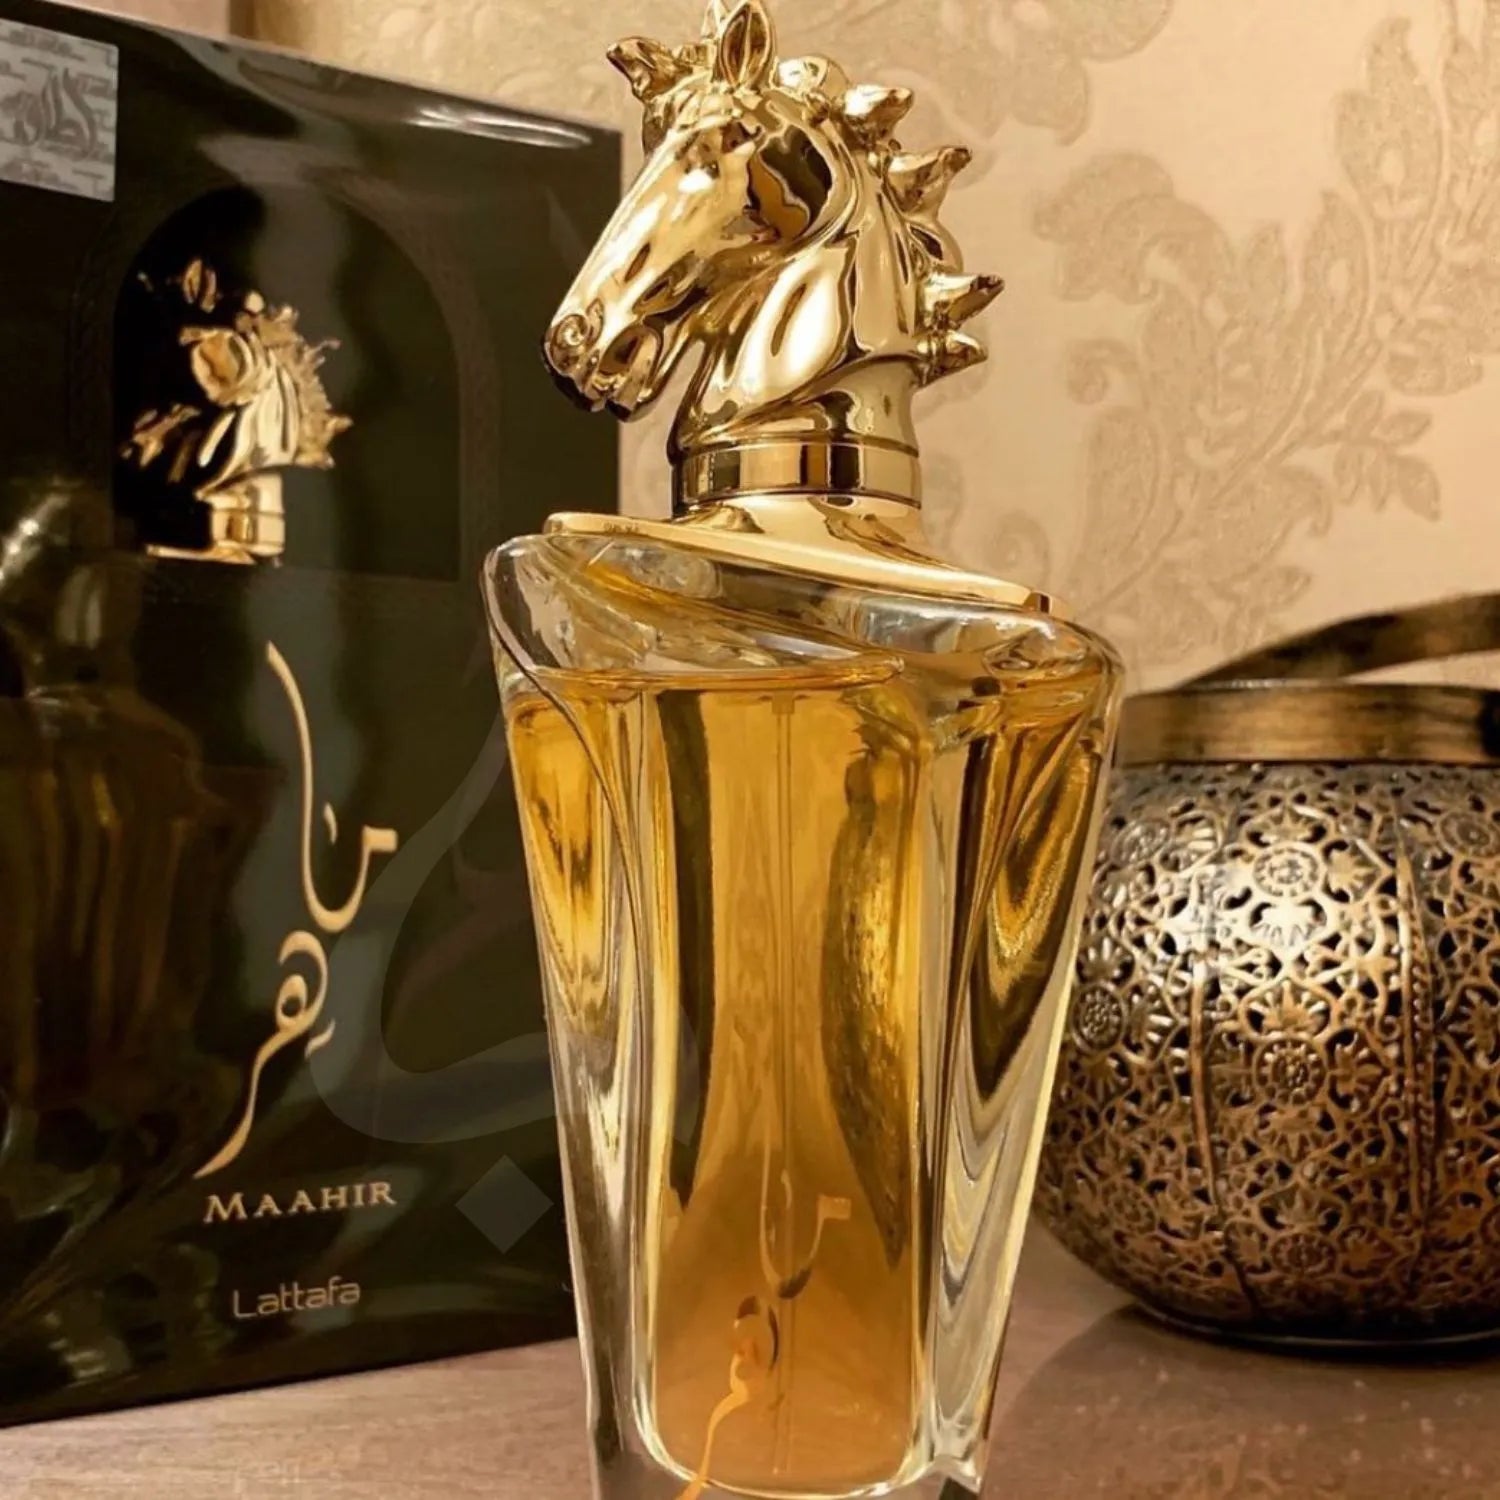 Maahir Lattafa Perfume Display